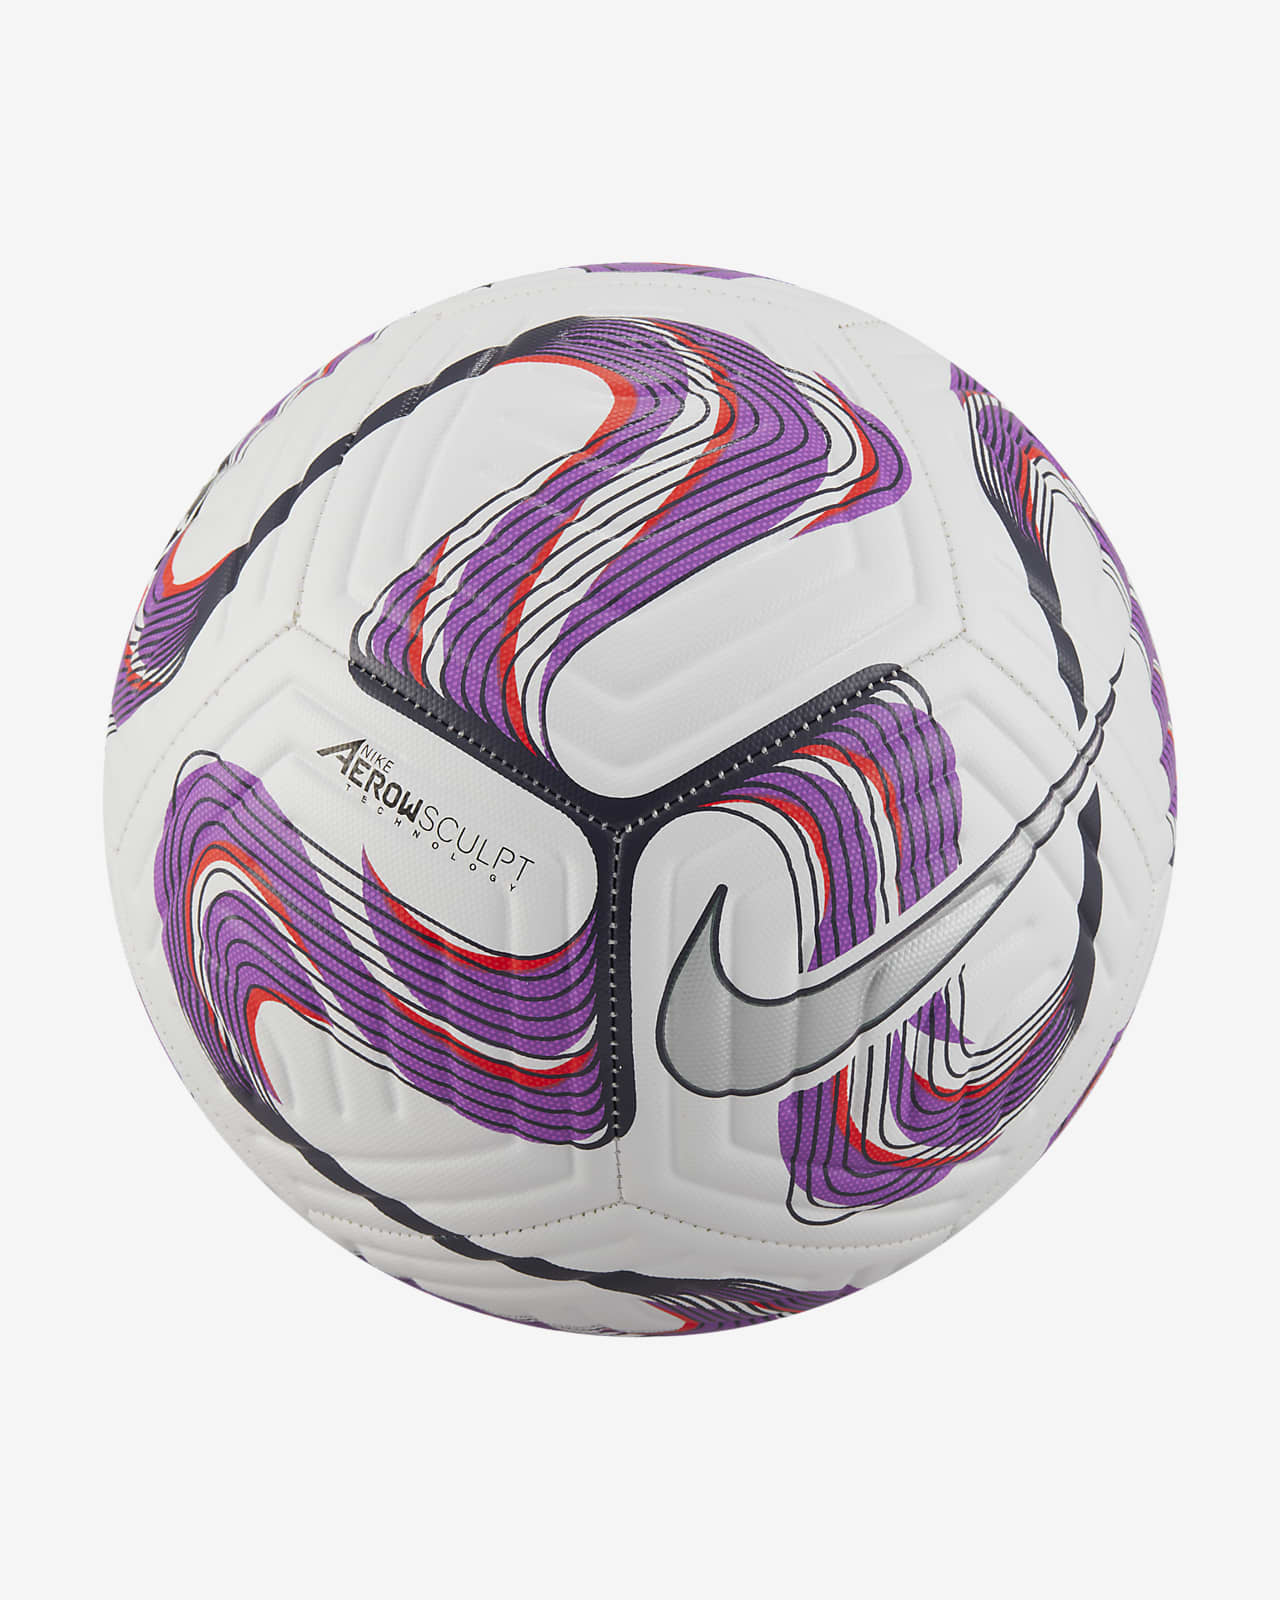 Academy Soccer Ball. Nike.com